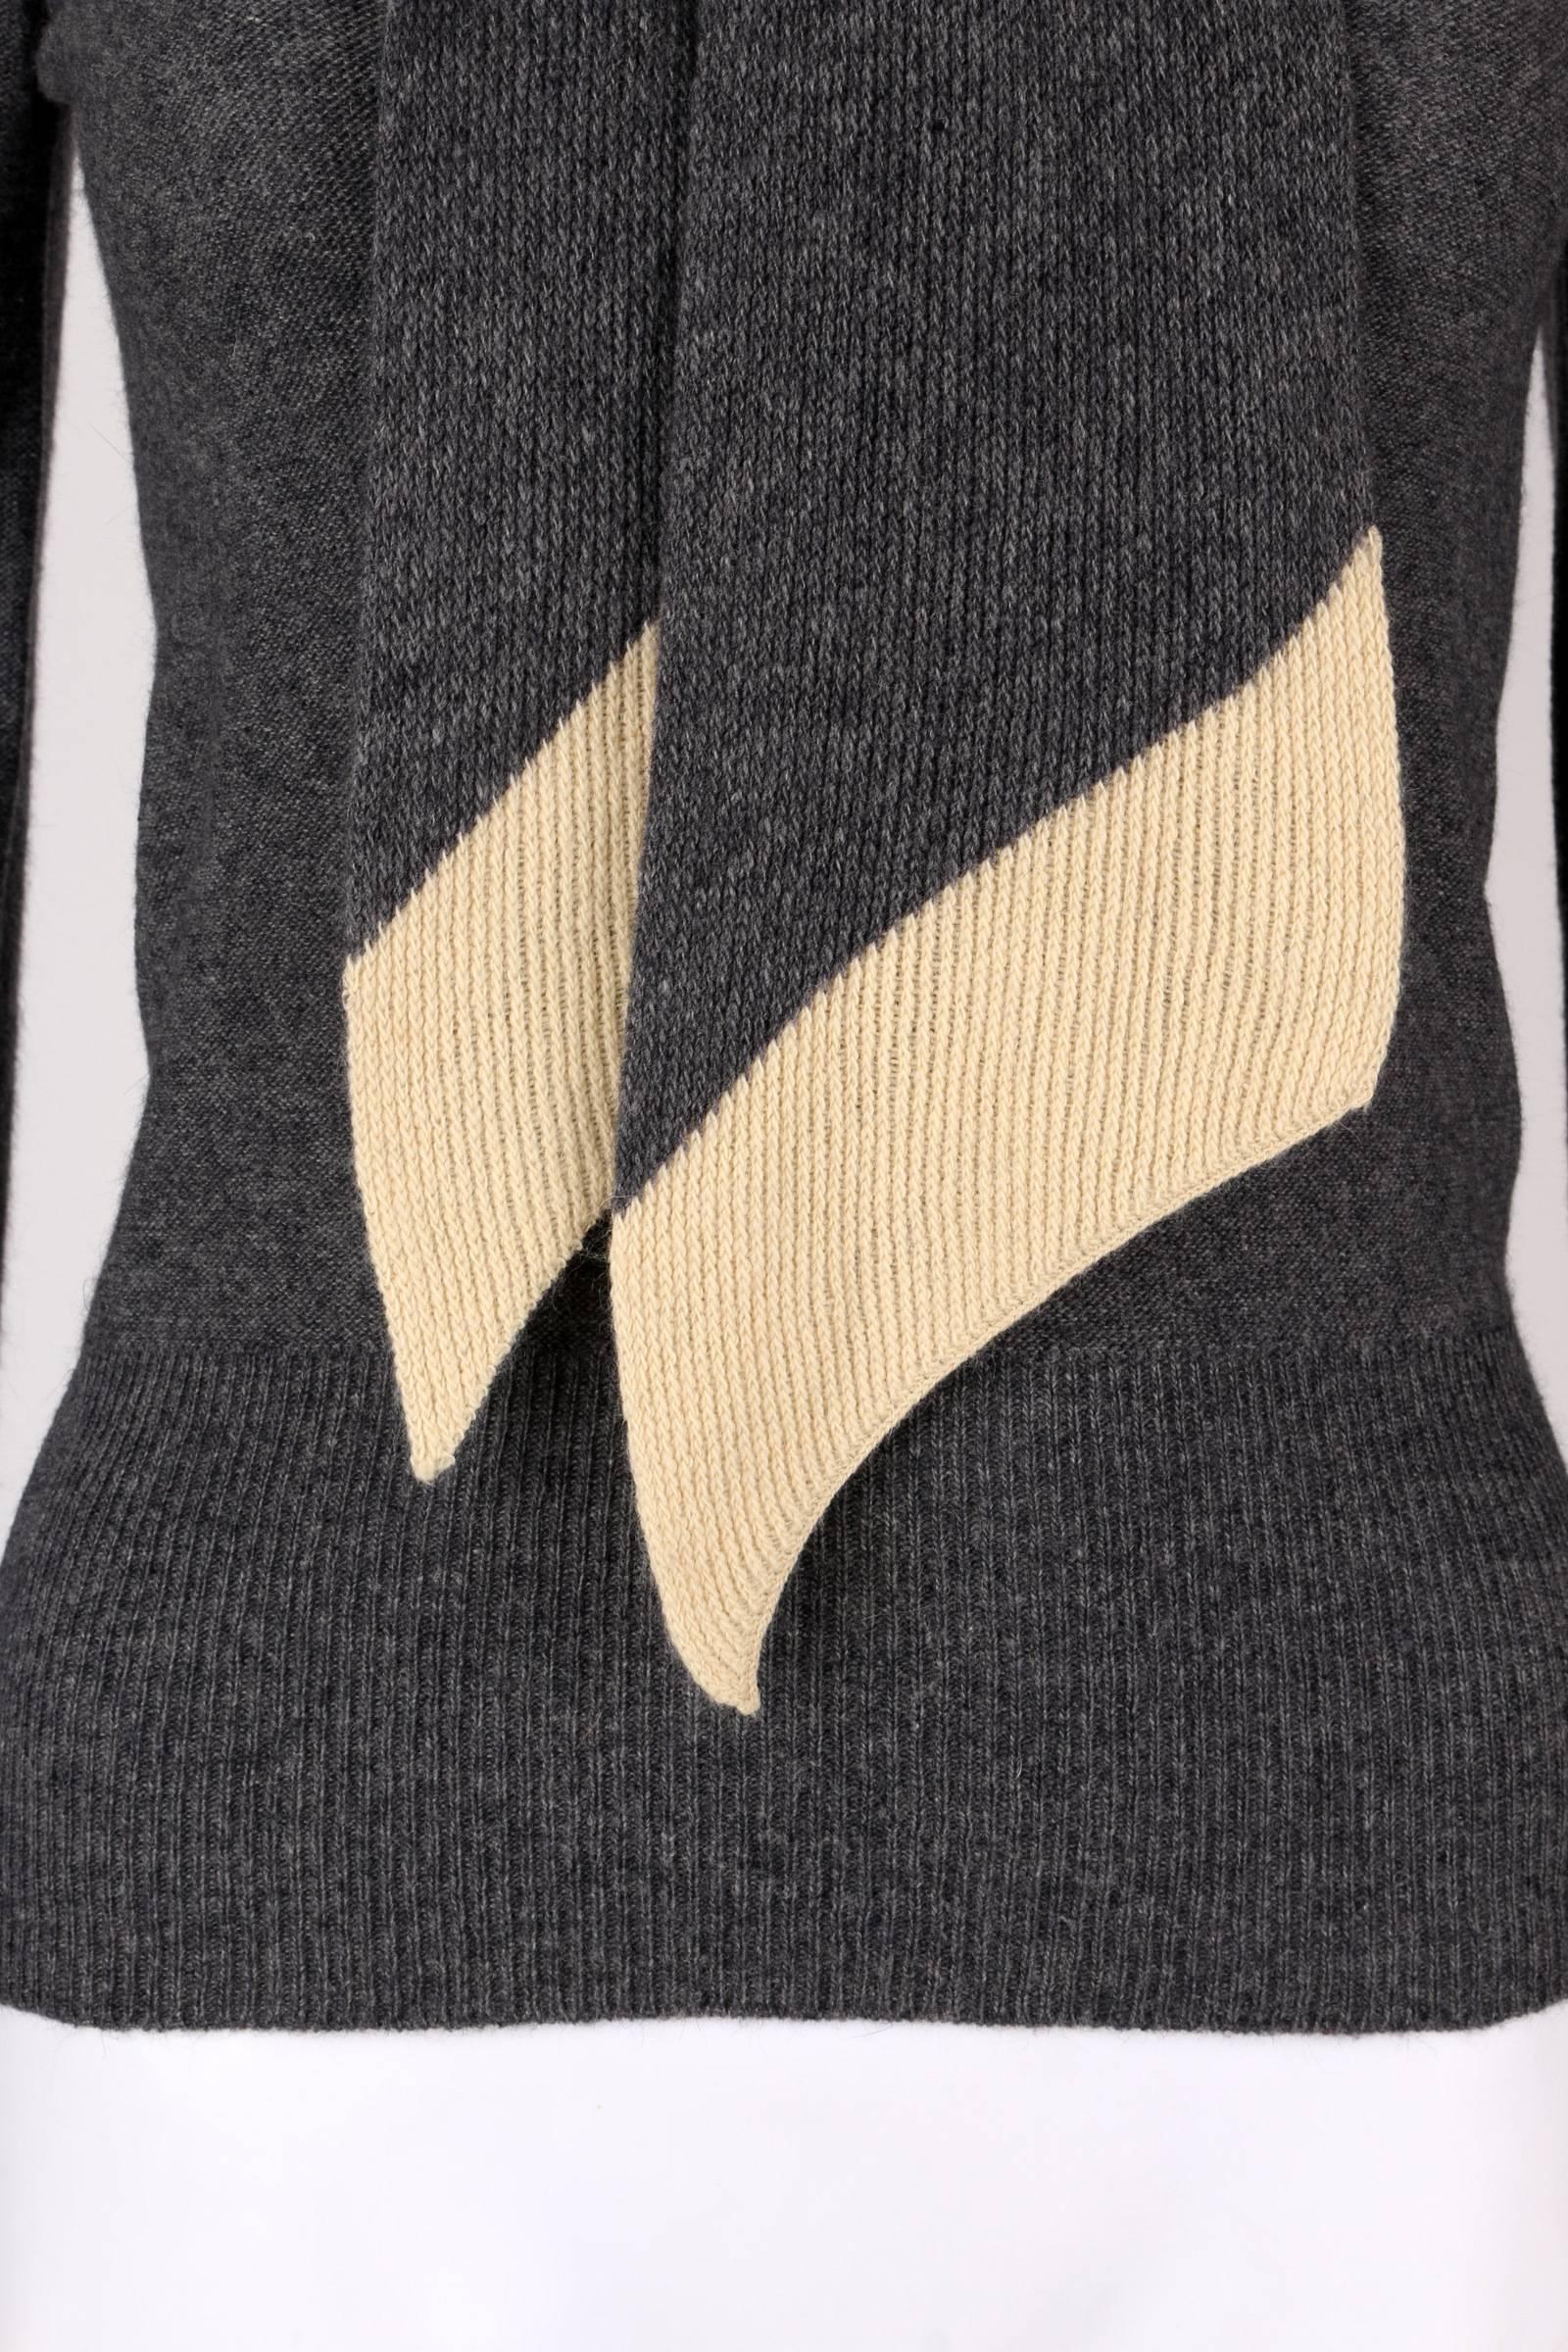 SONIA RYKIEL Chez Henri Bendel c.1960's Gray Wool Knit Scarf Pullover Sweater 3